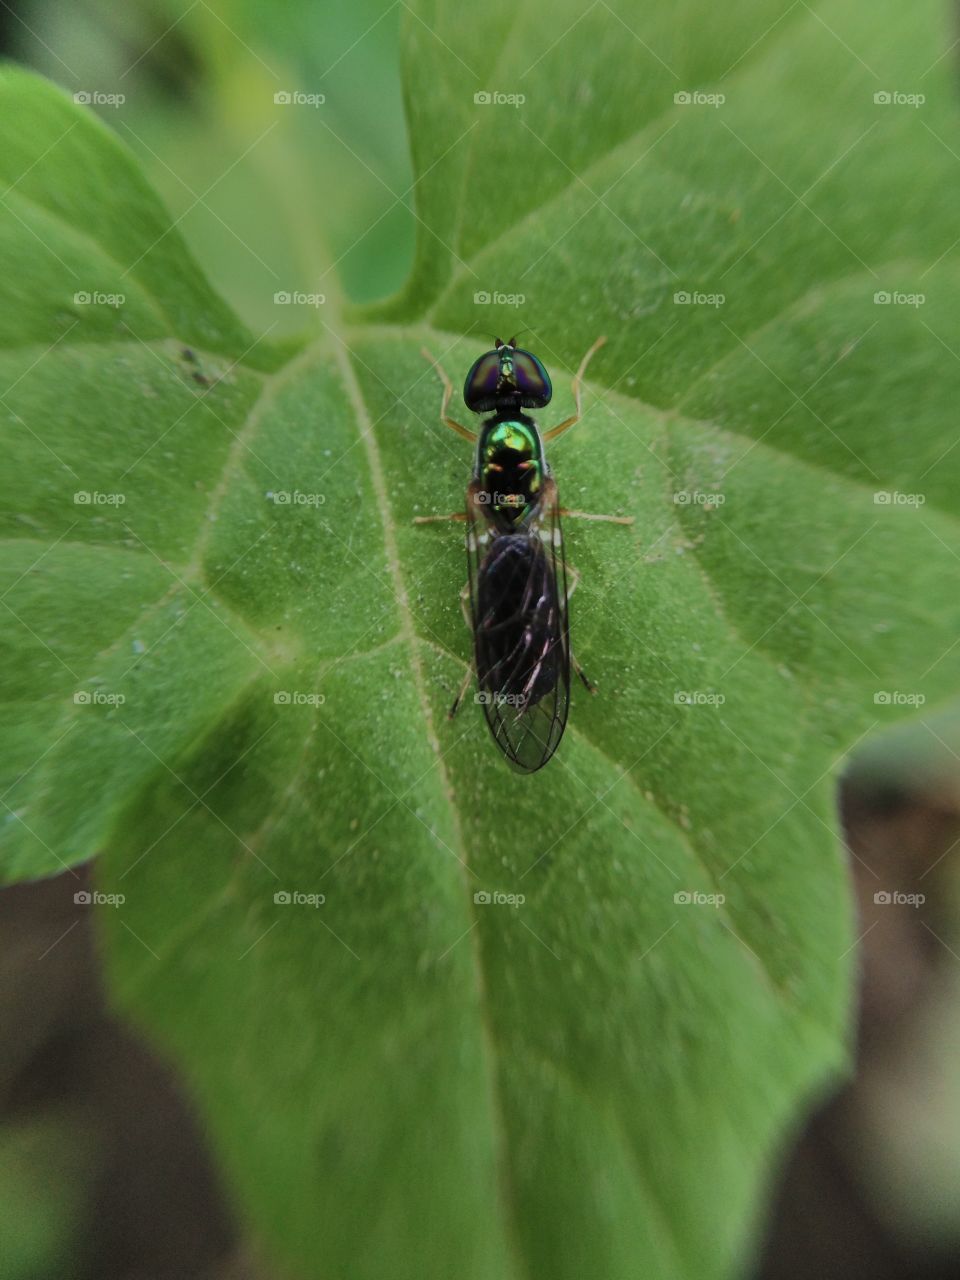 beautiful small fly